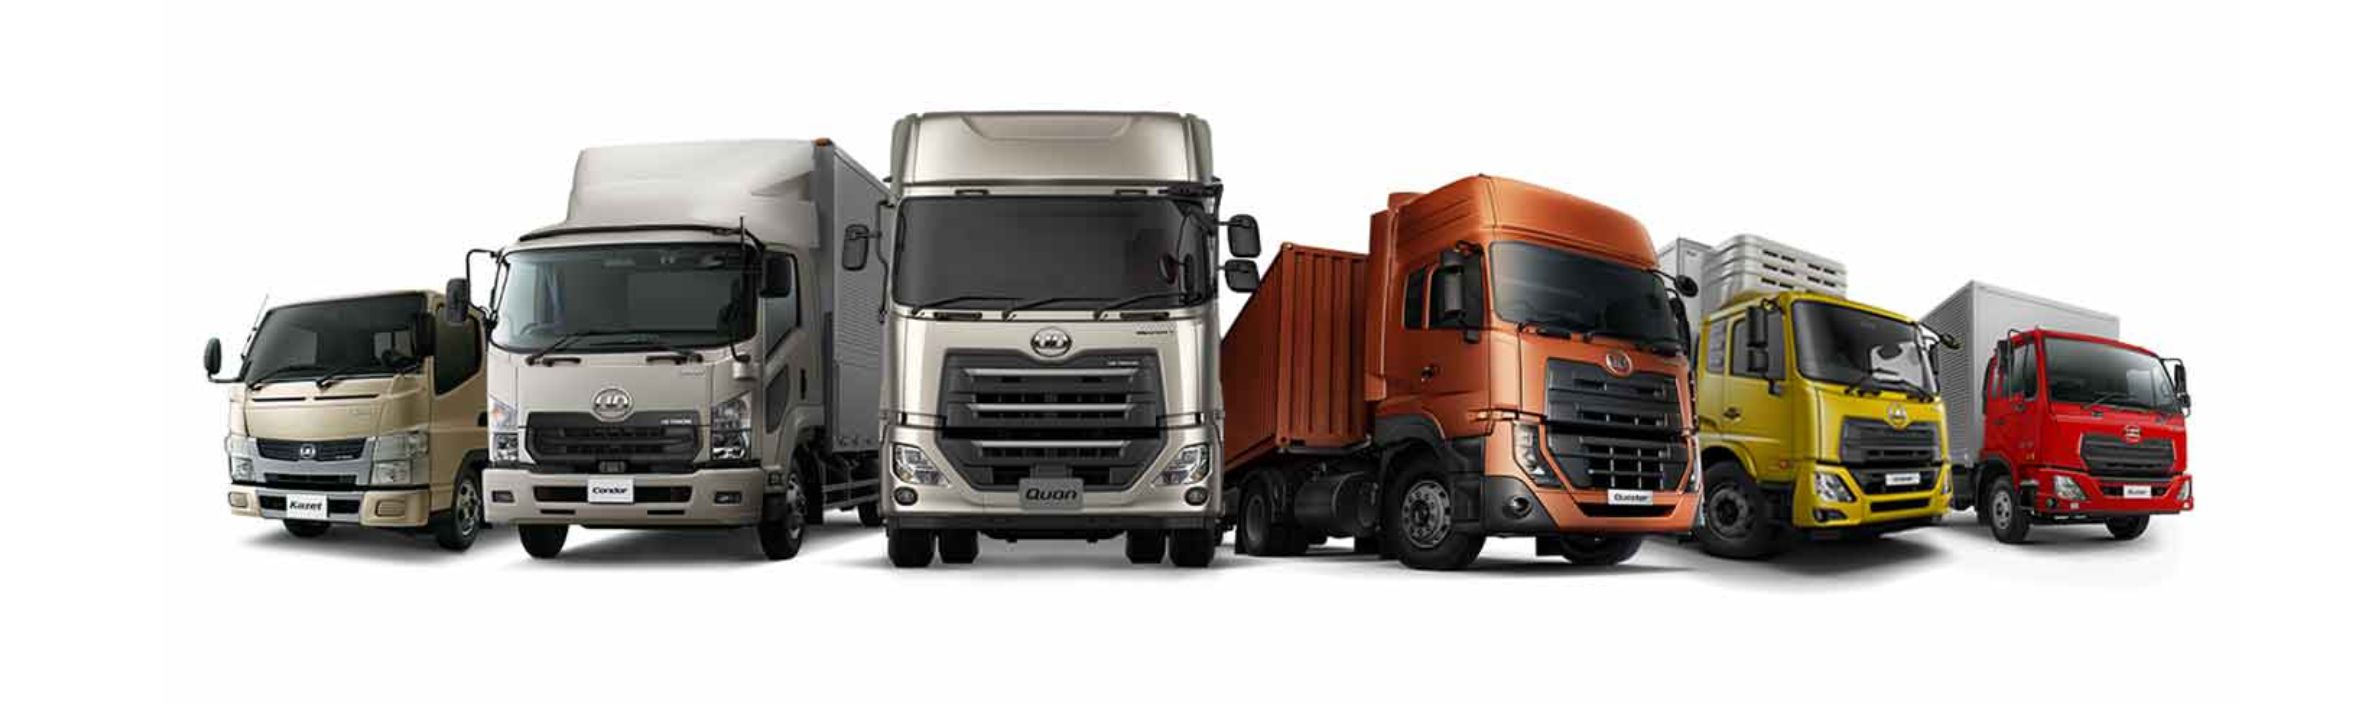 ud-trucks-parts-dealer-genuine-parts-dealer-supplier-parts7.ae-dubai.jpg